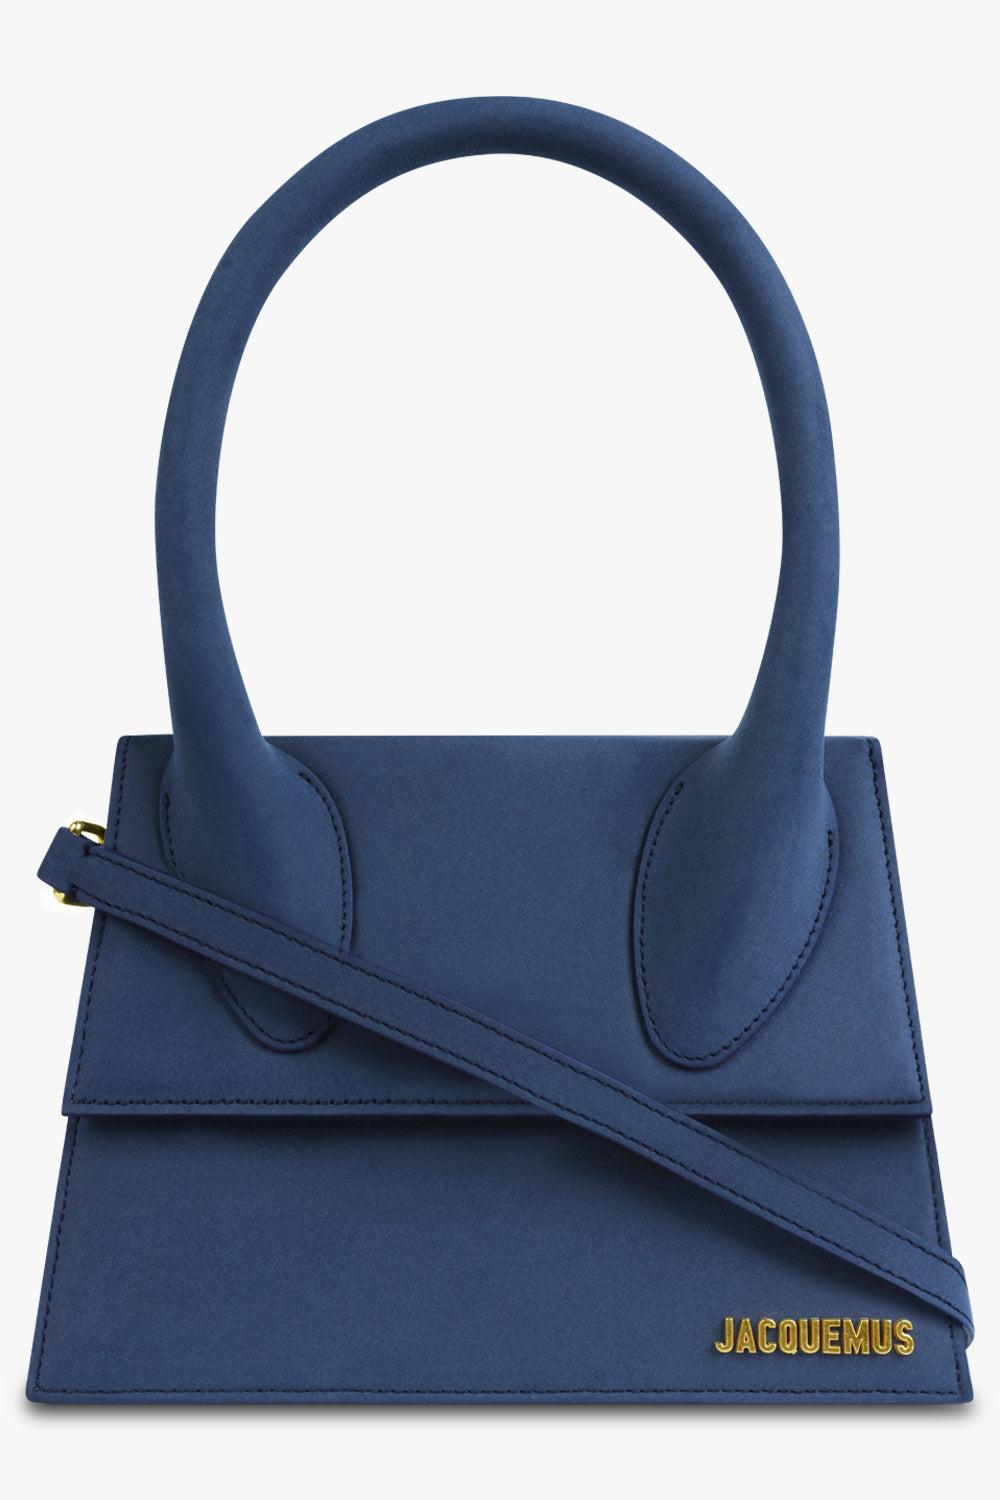 BALENCIAGA bag Handbag shoulder Satchel City Medium Navy Blue Leather $1995  | eBay